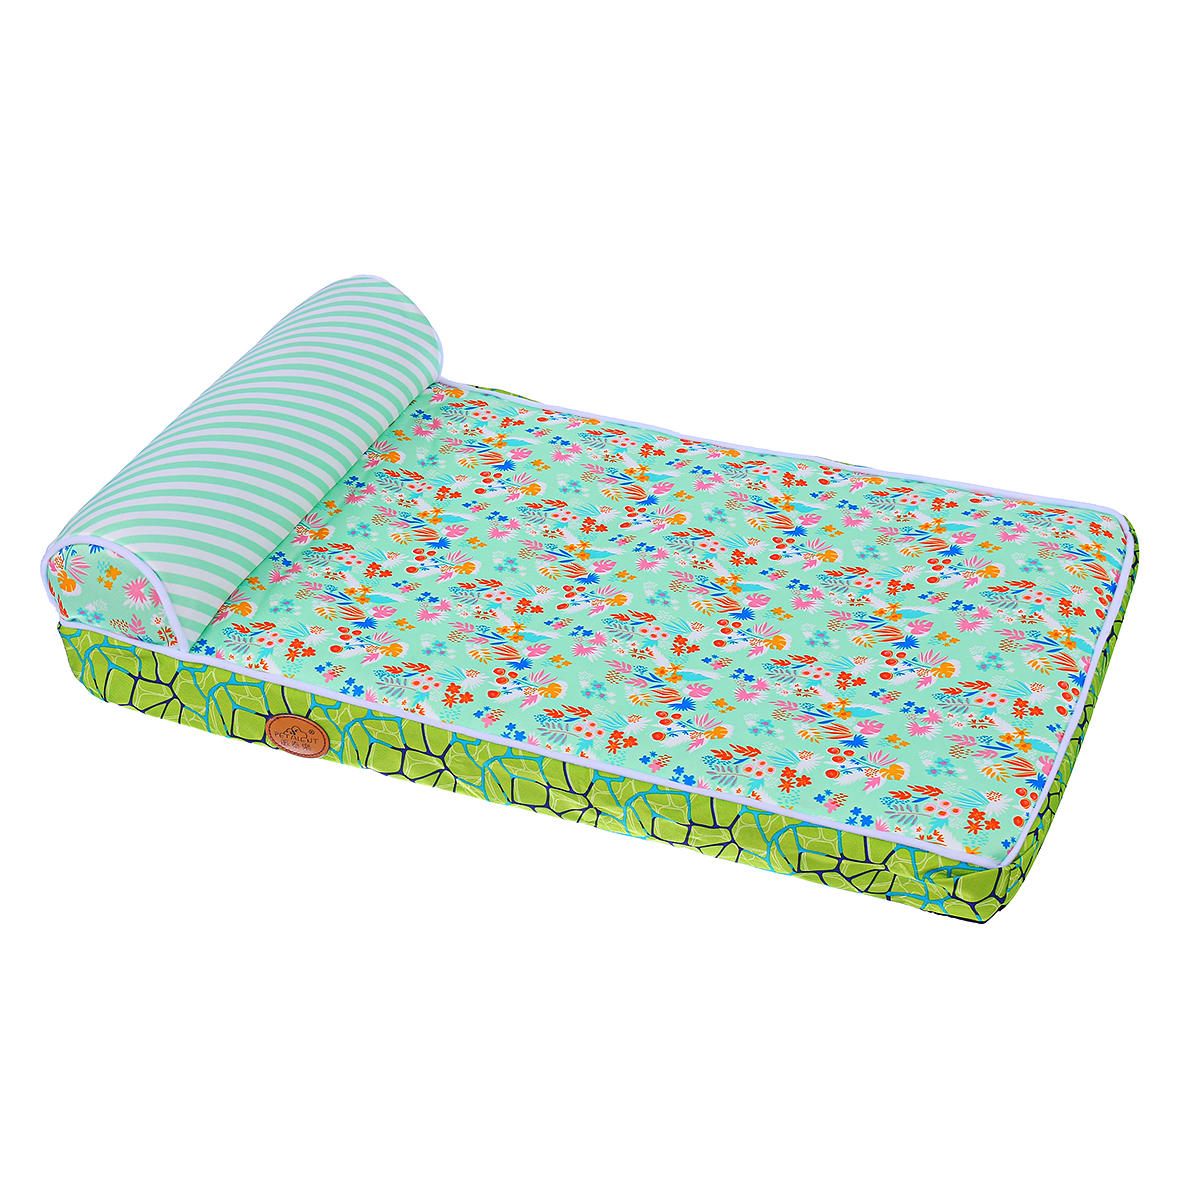 Sofa Shape Large Dog Bed Multicolor Soft Waterproof Pet Sleeping Bed Mat House Kennels-heyidear